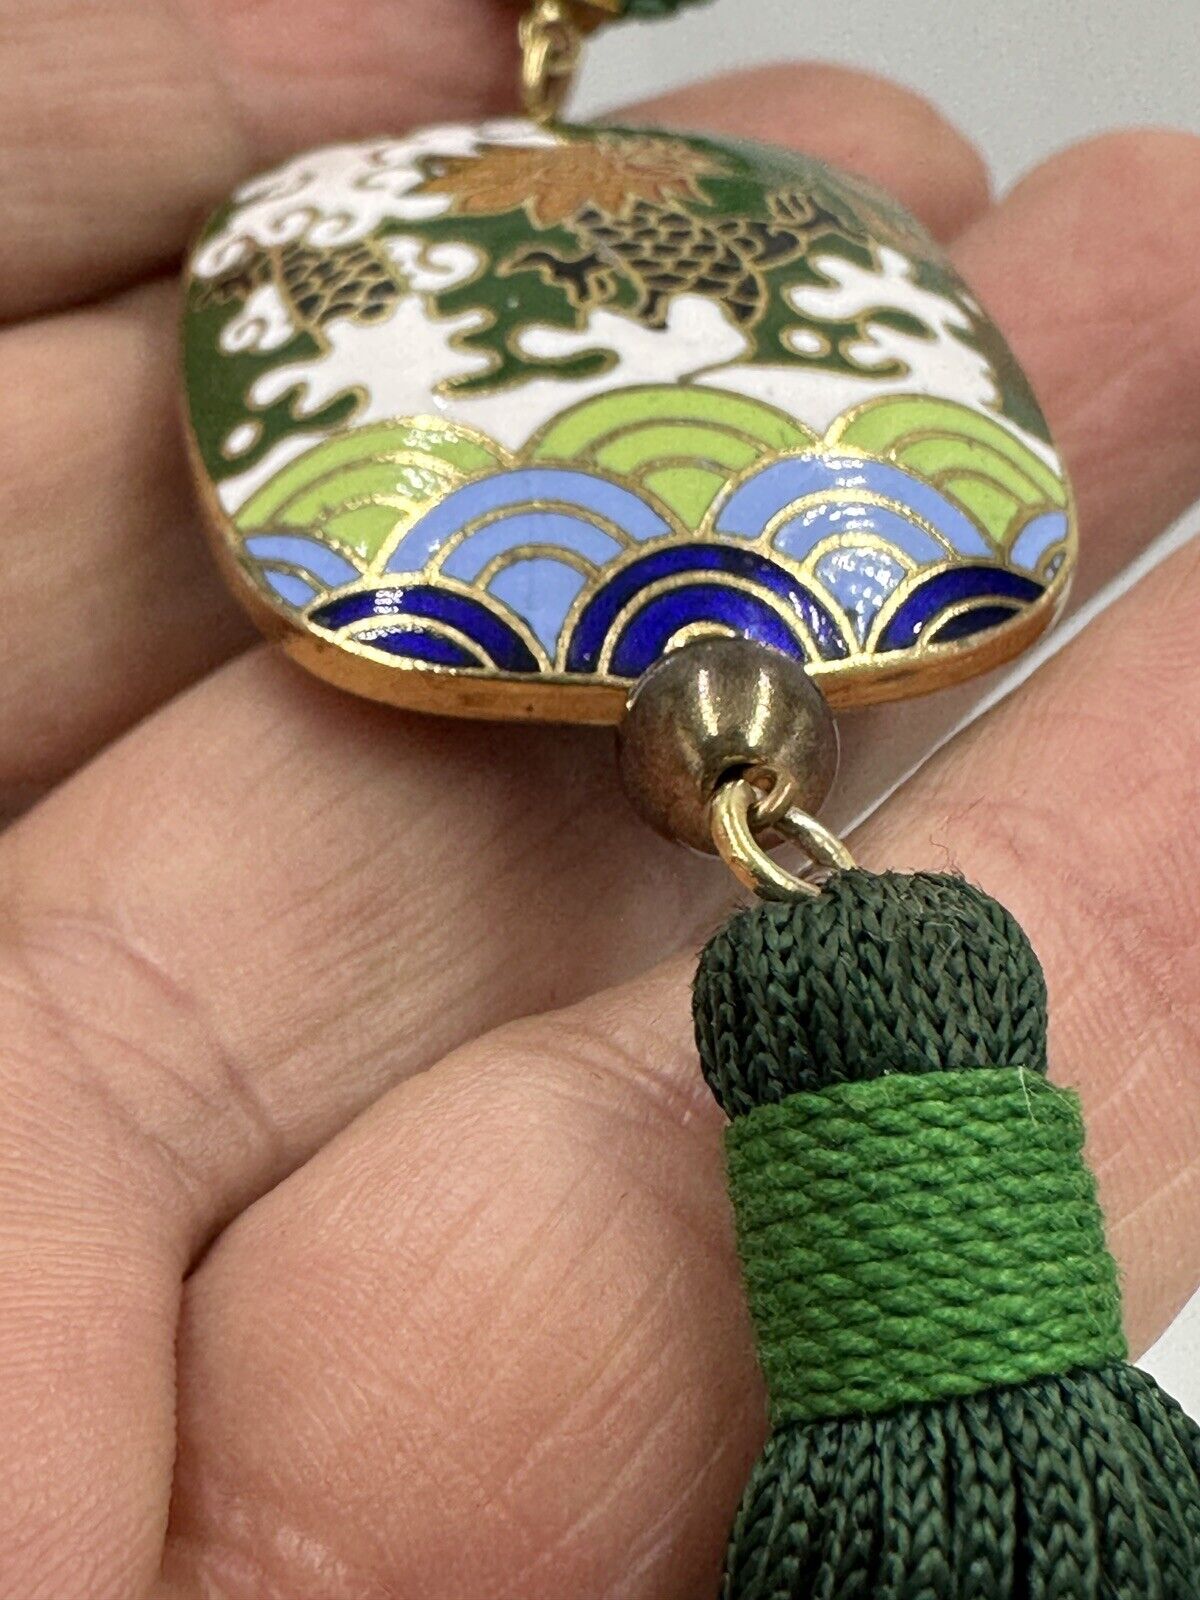 Necklace Tasseled Enamel Pendant Asian Dragon Design Gold Tone Vintage Green